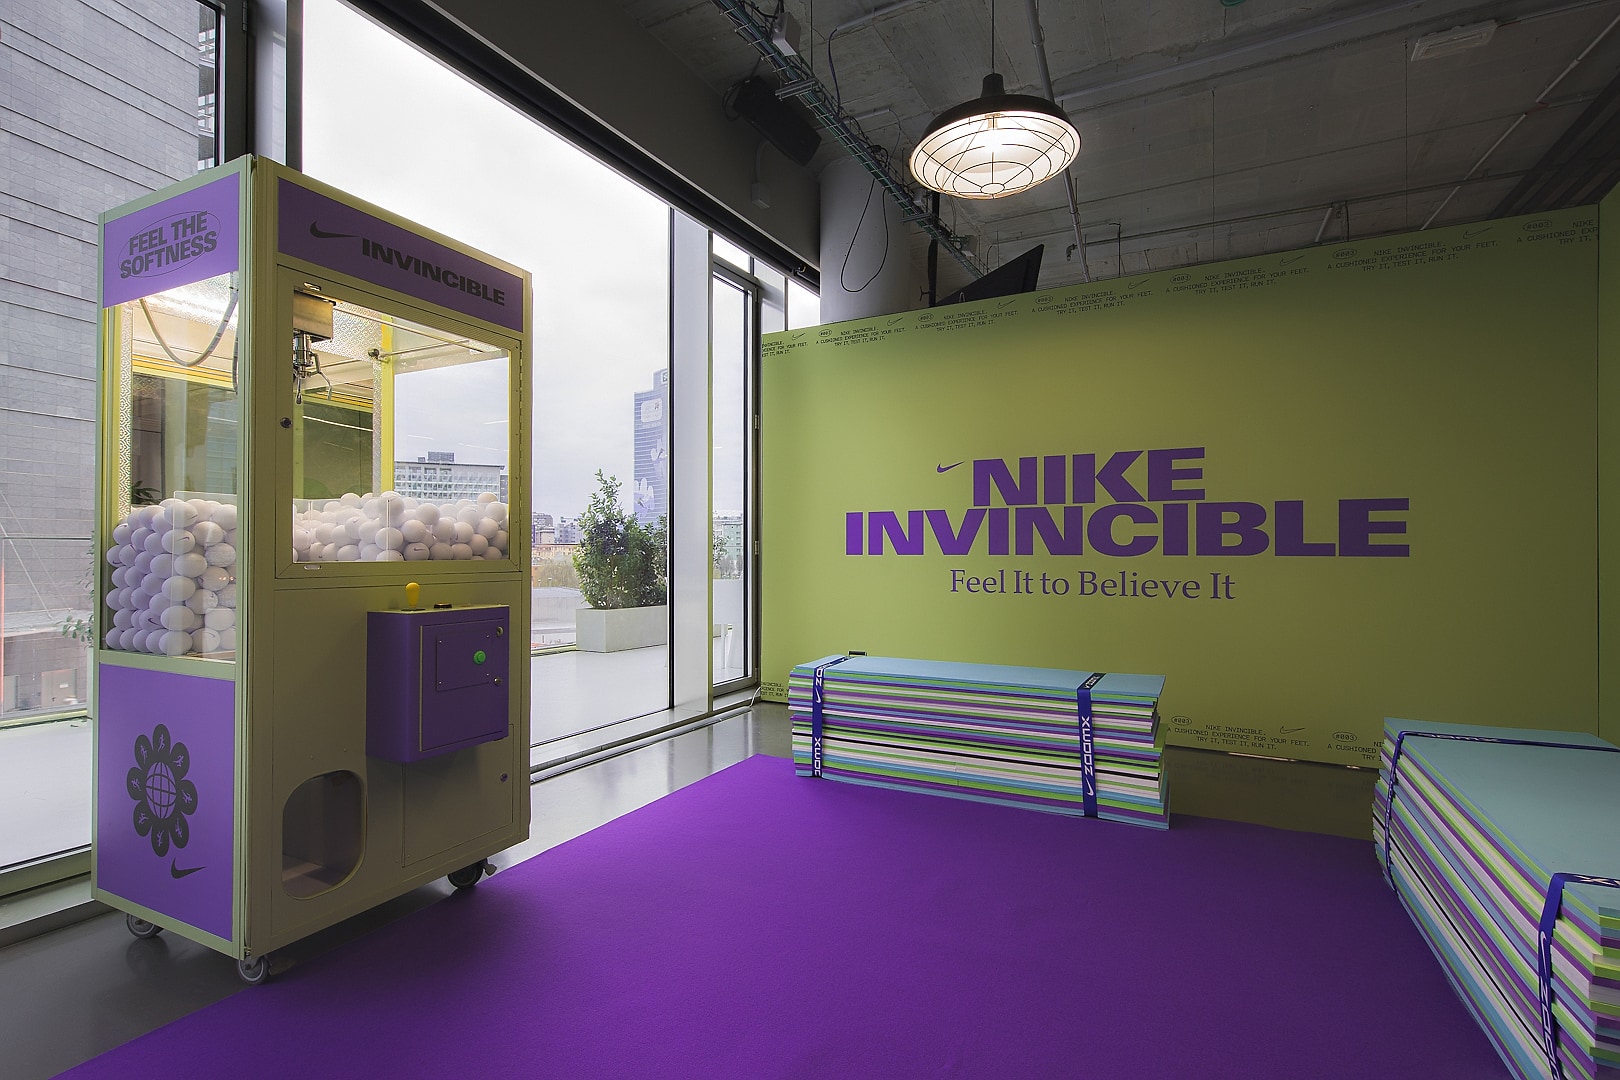 Nike Invincible